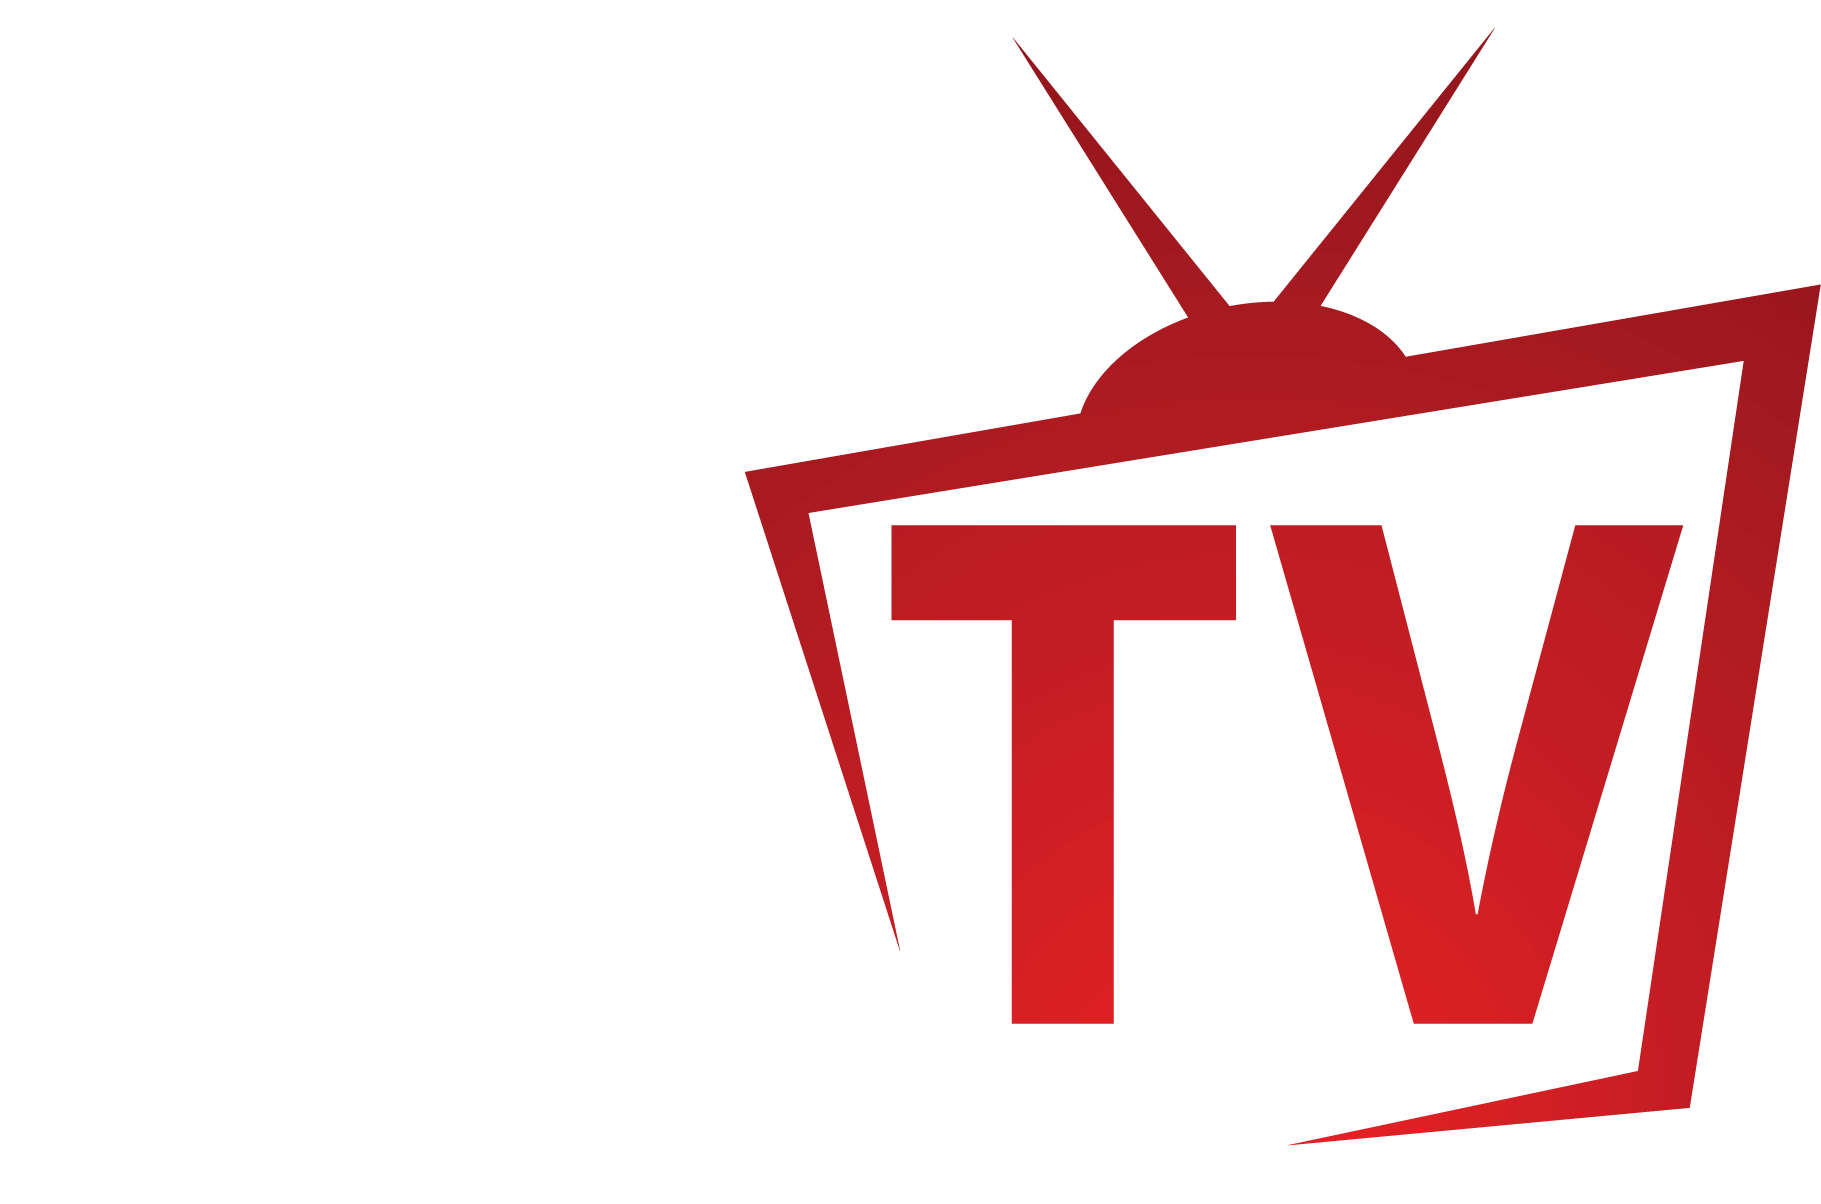 LG TV CHANNEL 2022 LOGO